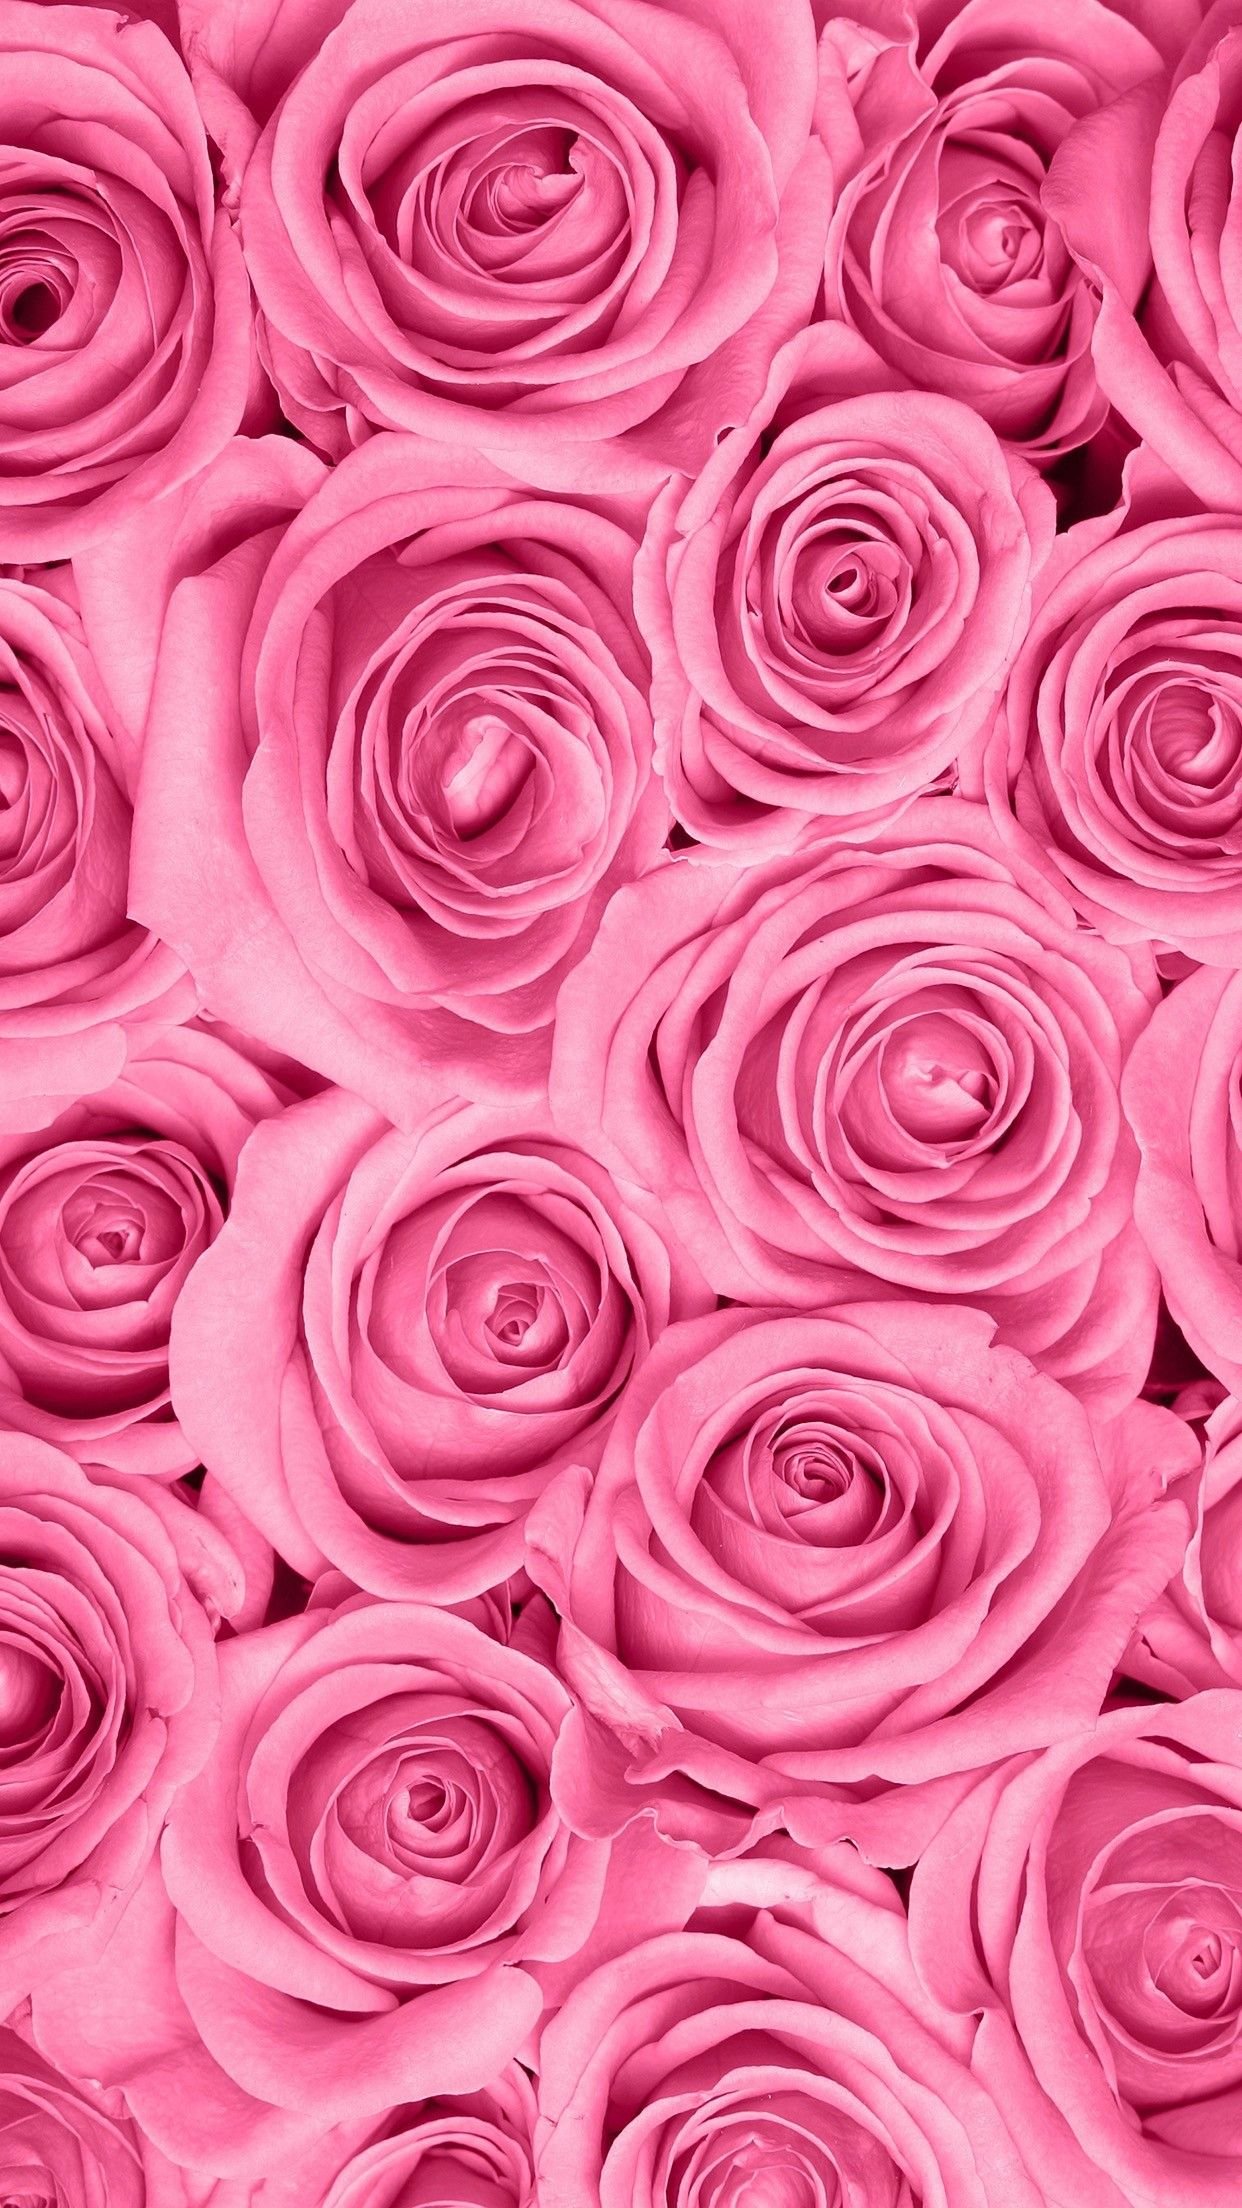 Pink Rose Wallpaper  iPhone Android  Desktop Backgrounds